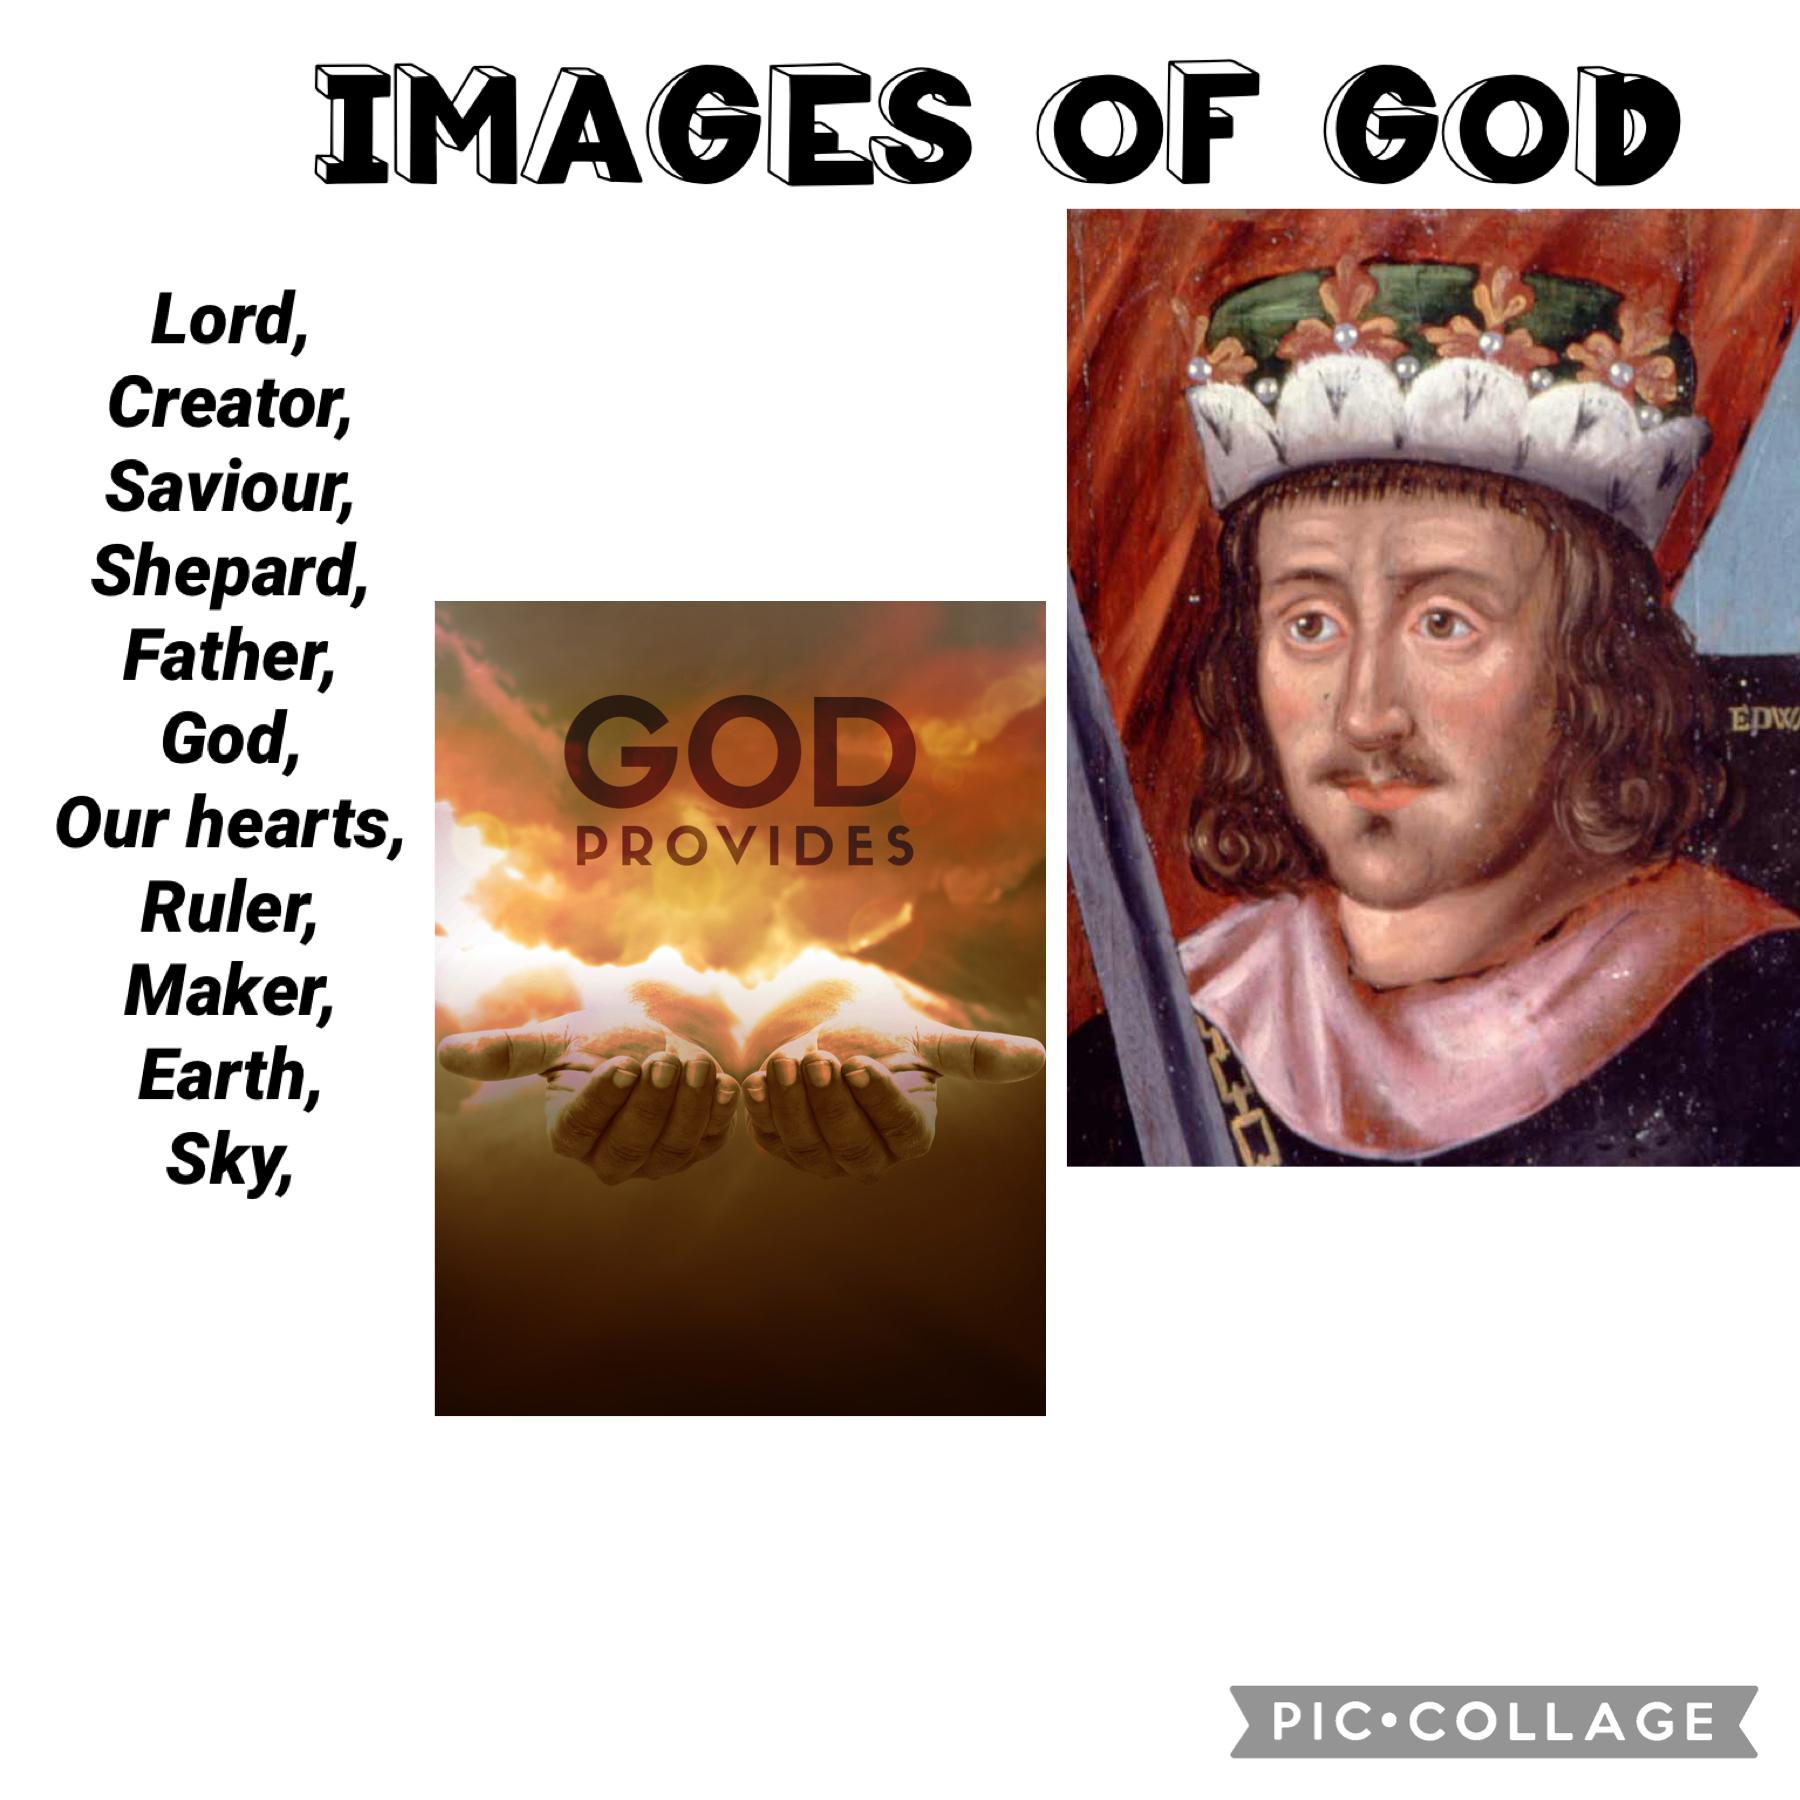 Image of God
